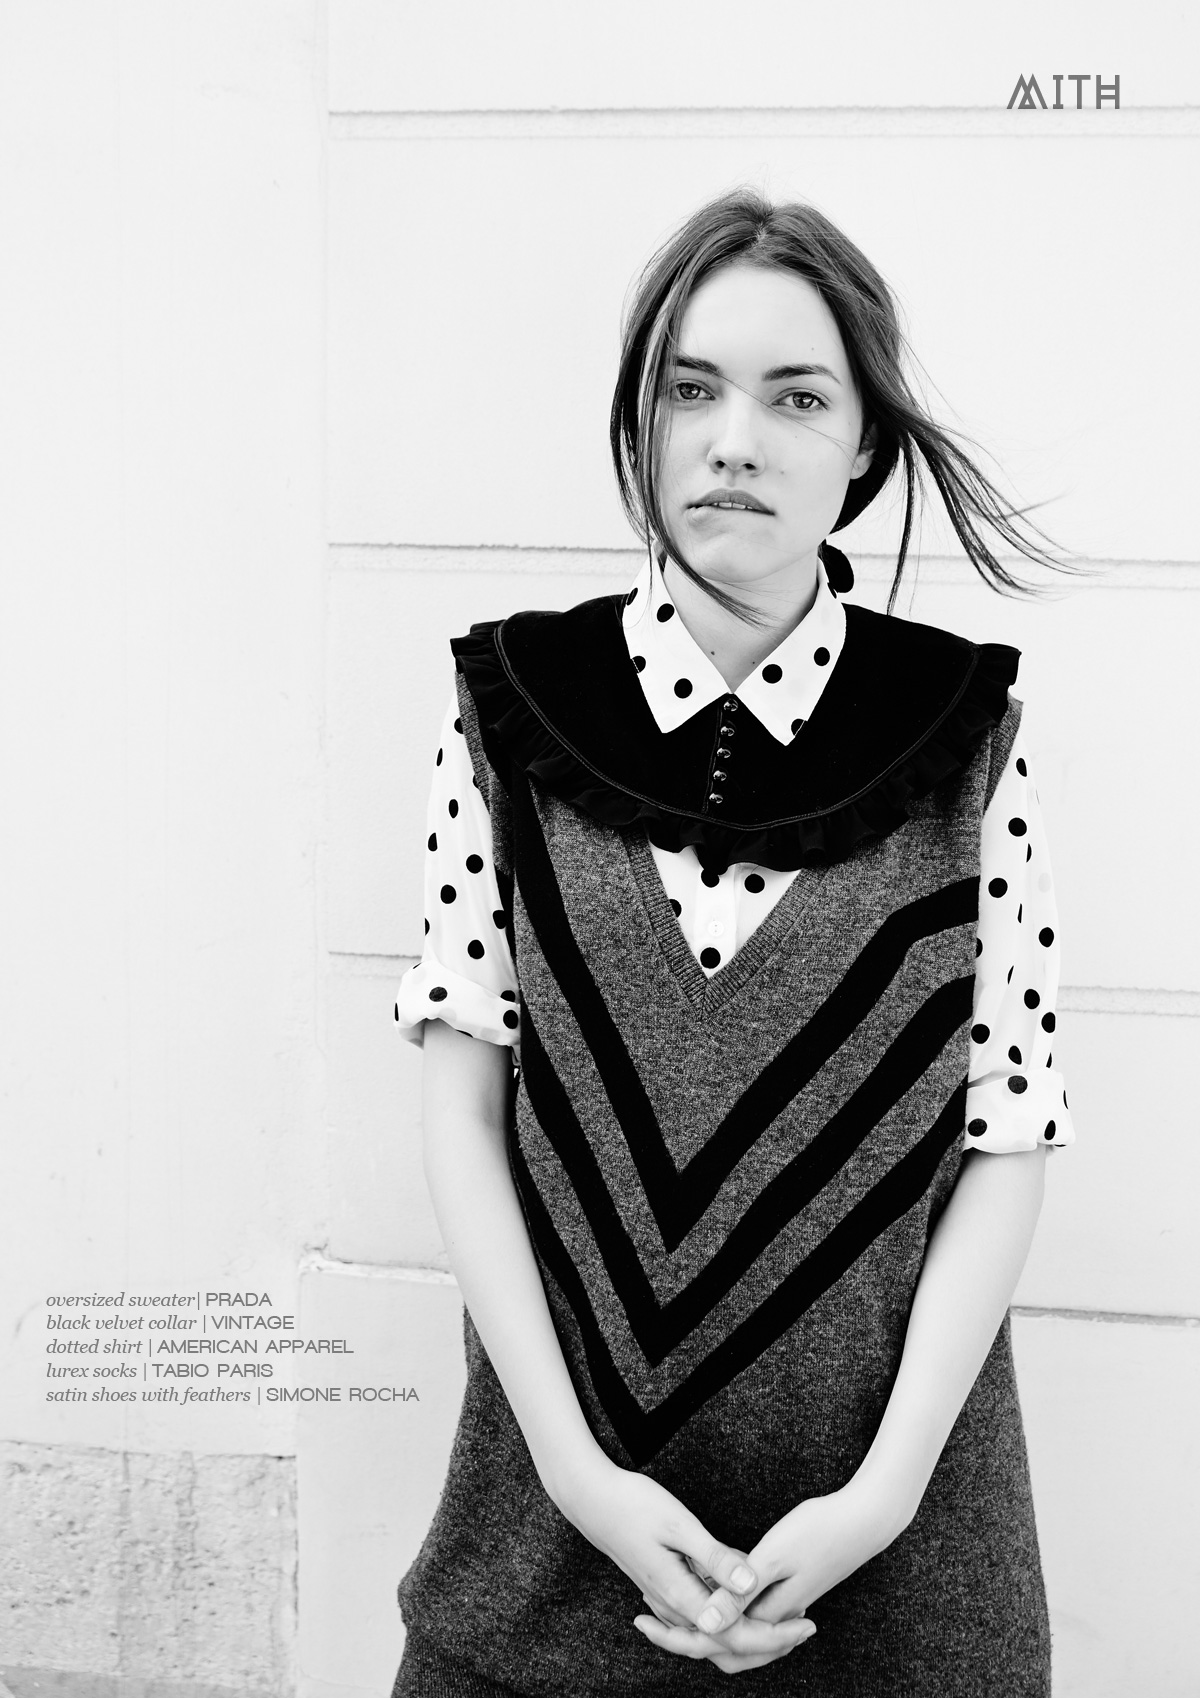 MITH Fashion Editorial - Time for School :: Margaux Brazhnyk @ Star System Models by Nicolas Le Forestier